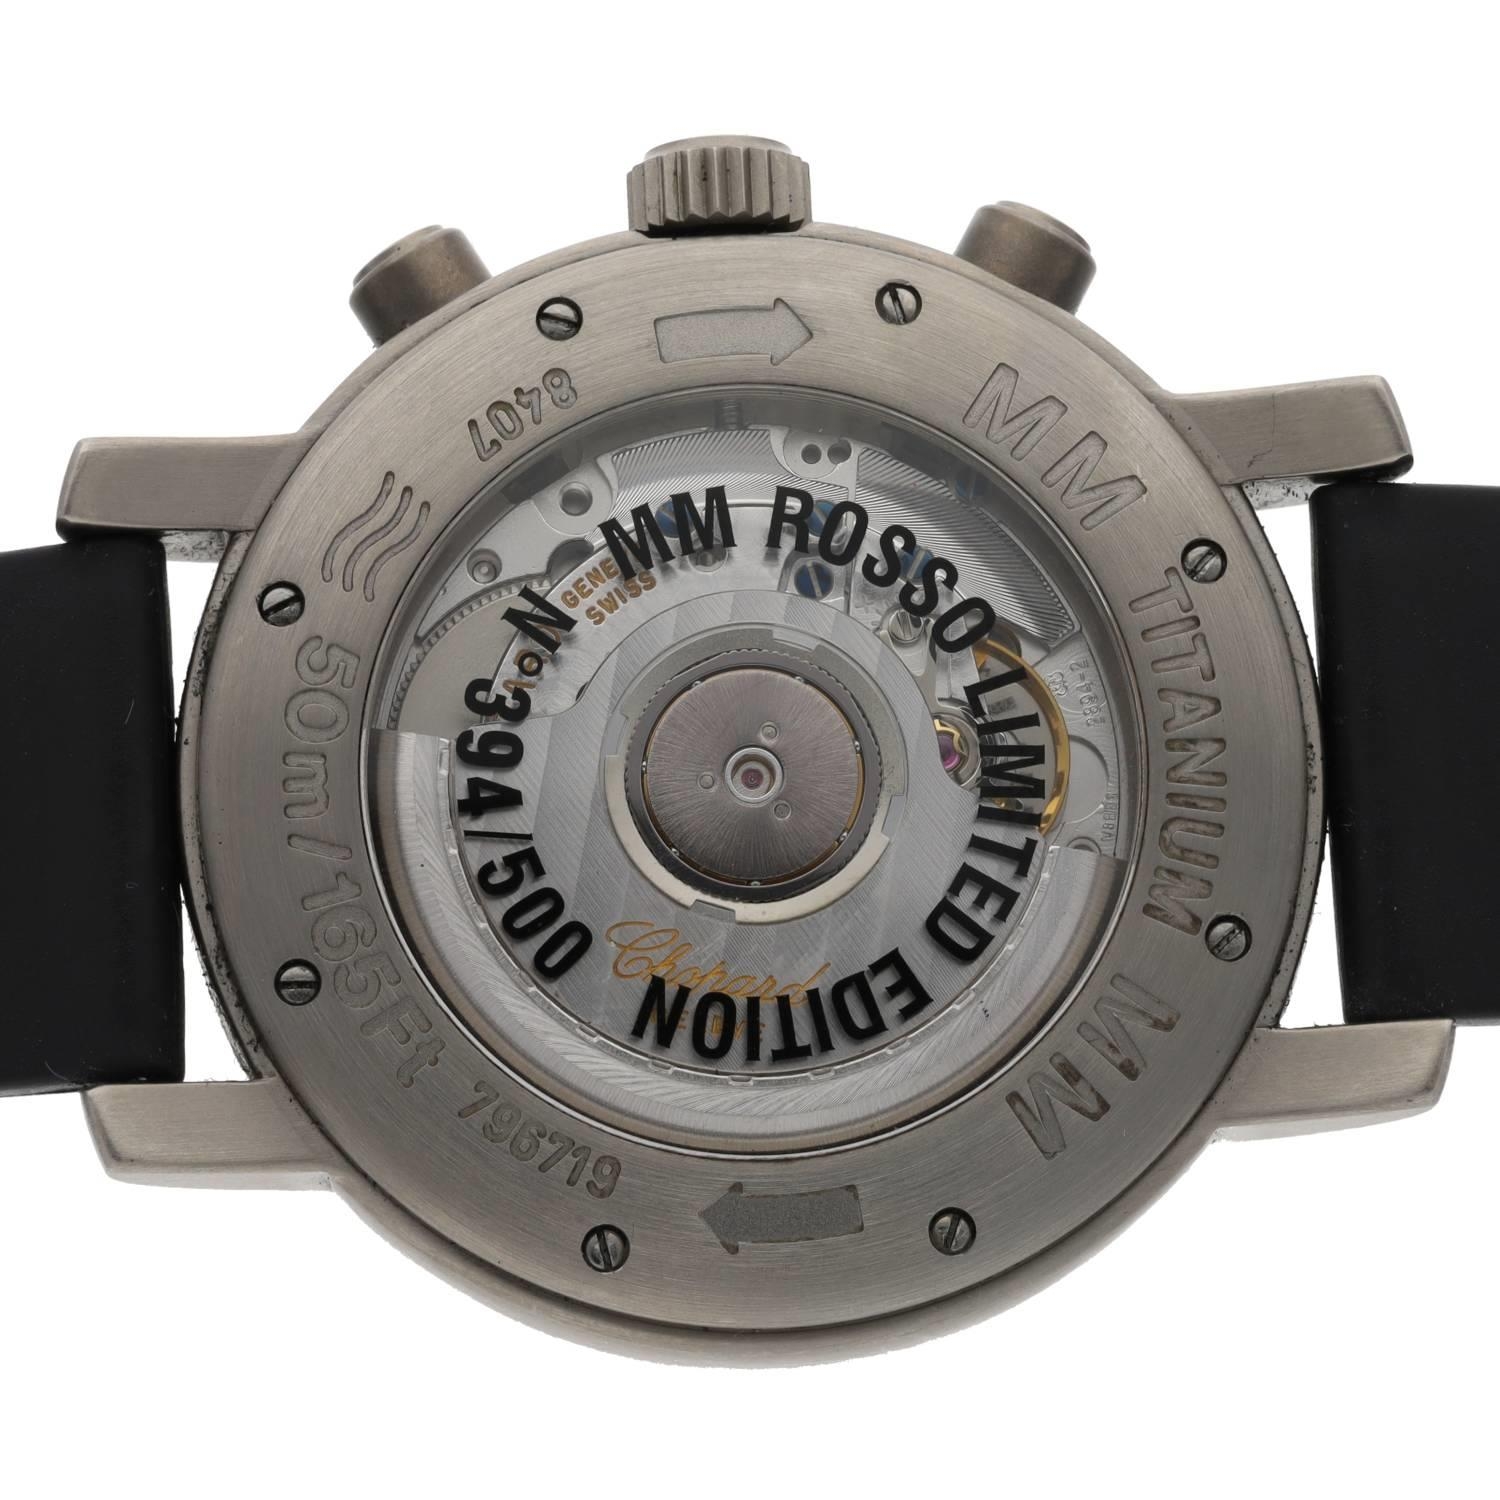 Chopard Mille Miglia MM Rosso Limited Edition Chronograph automatic titanium gentleman's wristwatch, - Bild 2 aus 3